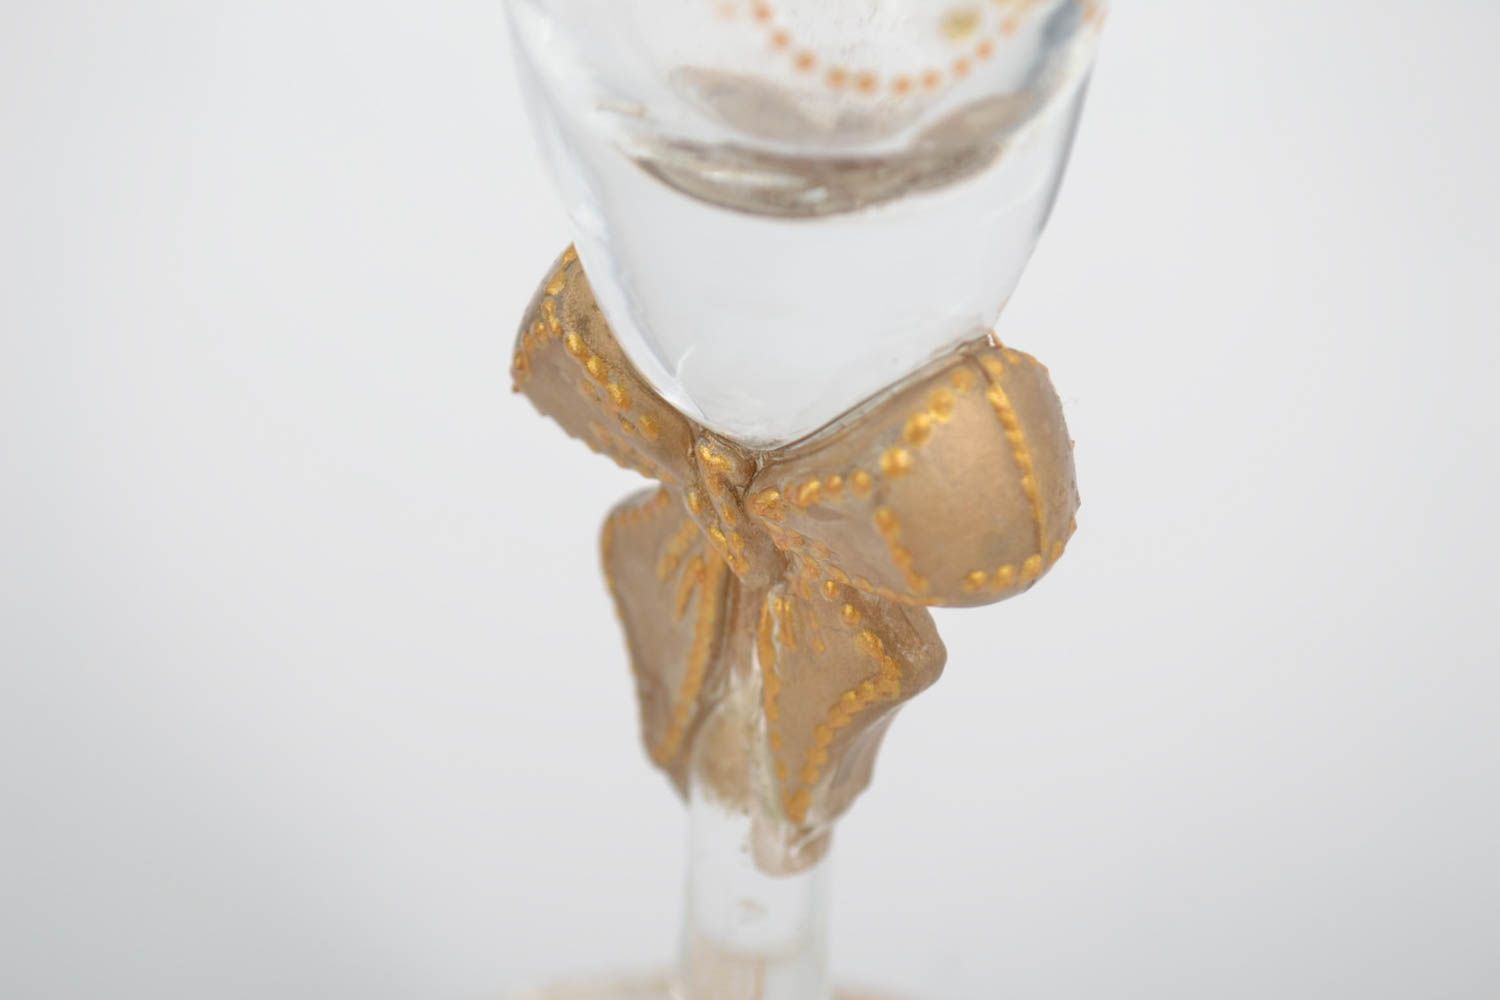 Copa de champán hecha a mano de cristal utensilio de cocina vajilla moderna foto 2